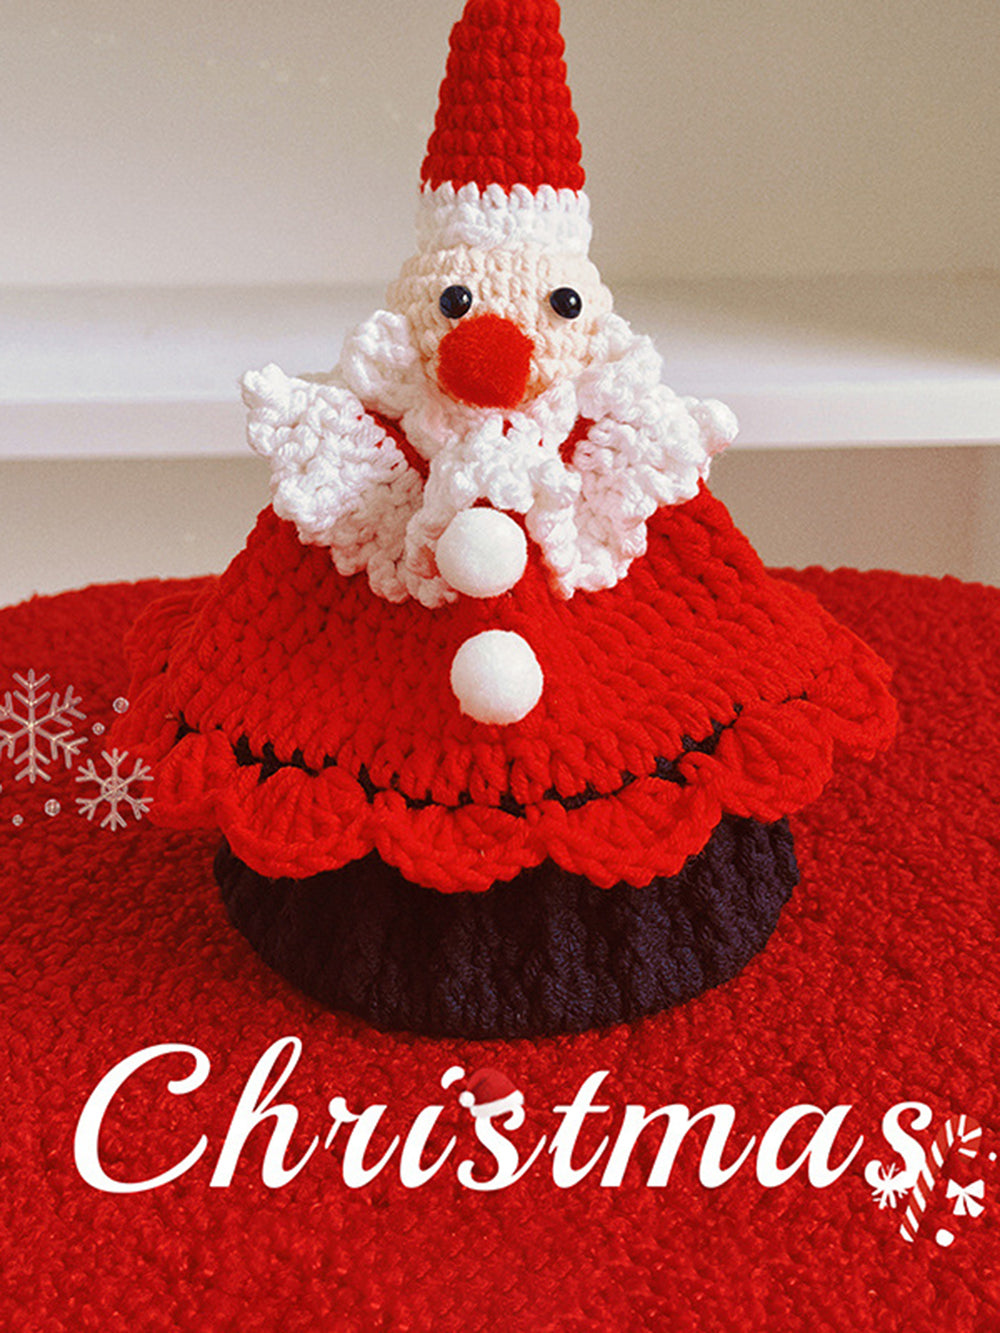 Christmas Tree Old Man's Wool Crocheted Christmas Gift